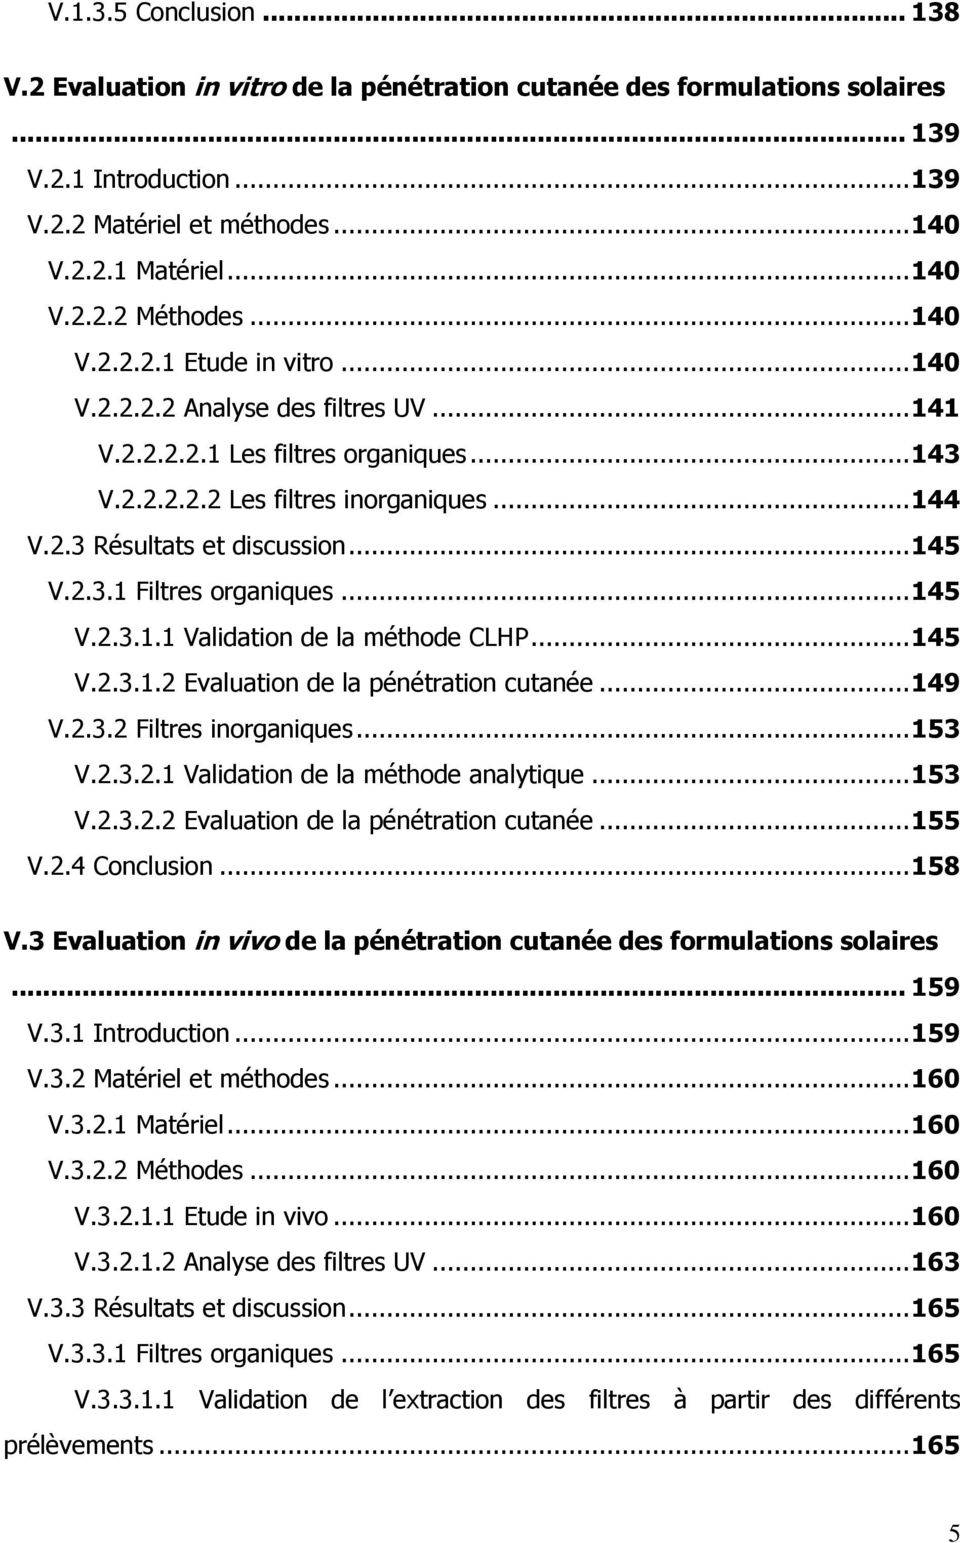 .. 145 V.2.3.1 Filtres organiques... 145 V.2.3.1.1 Validation de la méthode CLHP... 145 V.2.3.1.2 Evaluation de la pénétration cutanée... 149 V.2.3.2 Filtres inorganiques... 153 V.2.3.2.1 Validation de la méthode analytique.